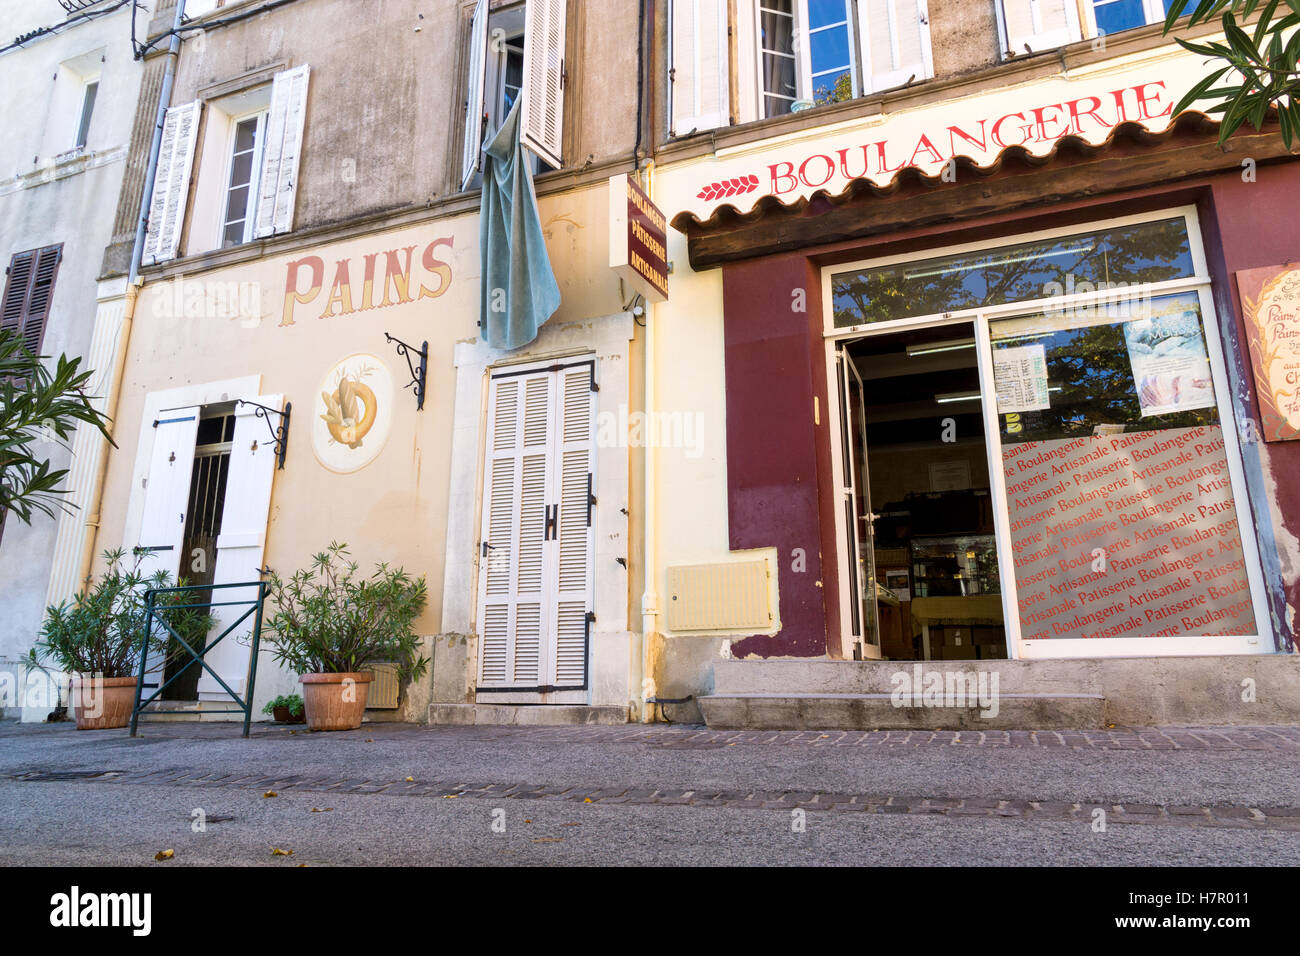 Una boulangerie, o forno, in La Garde-Freinet, Var, Francia. Foto Stock